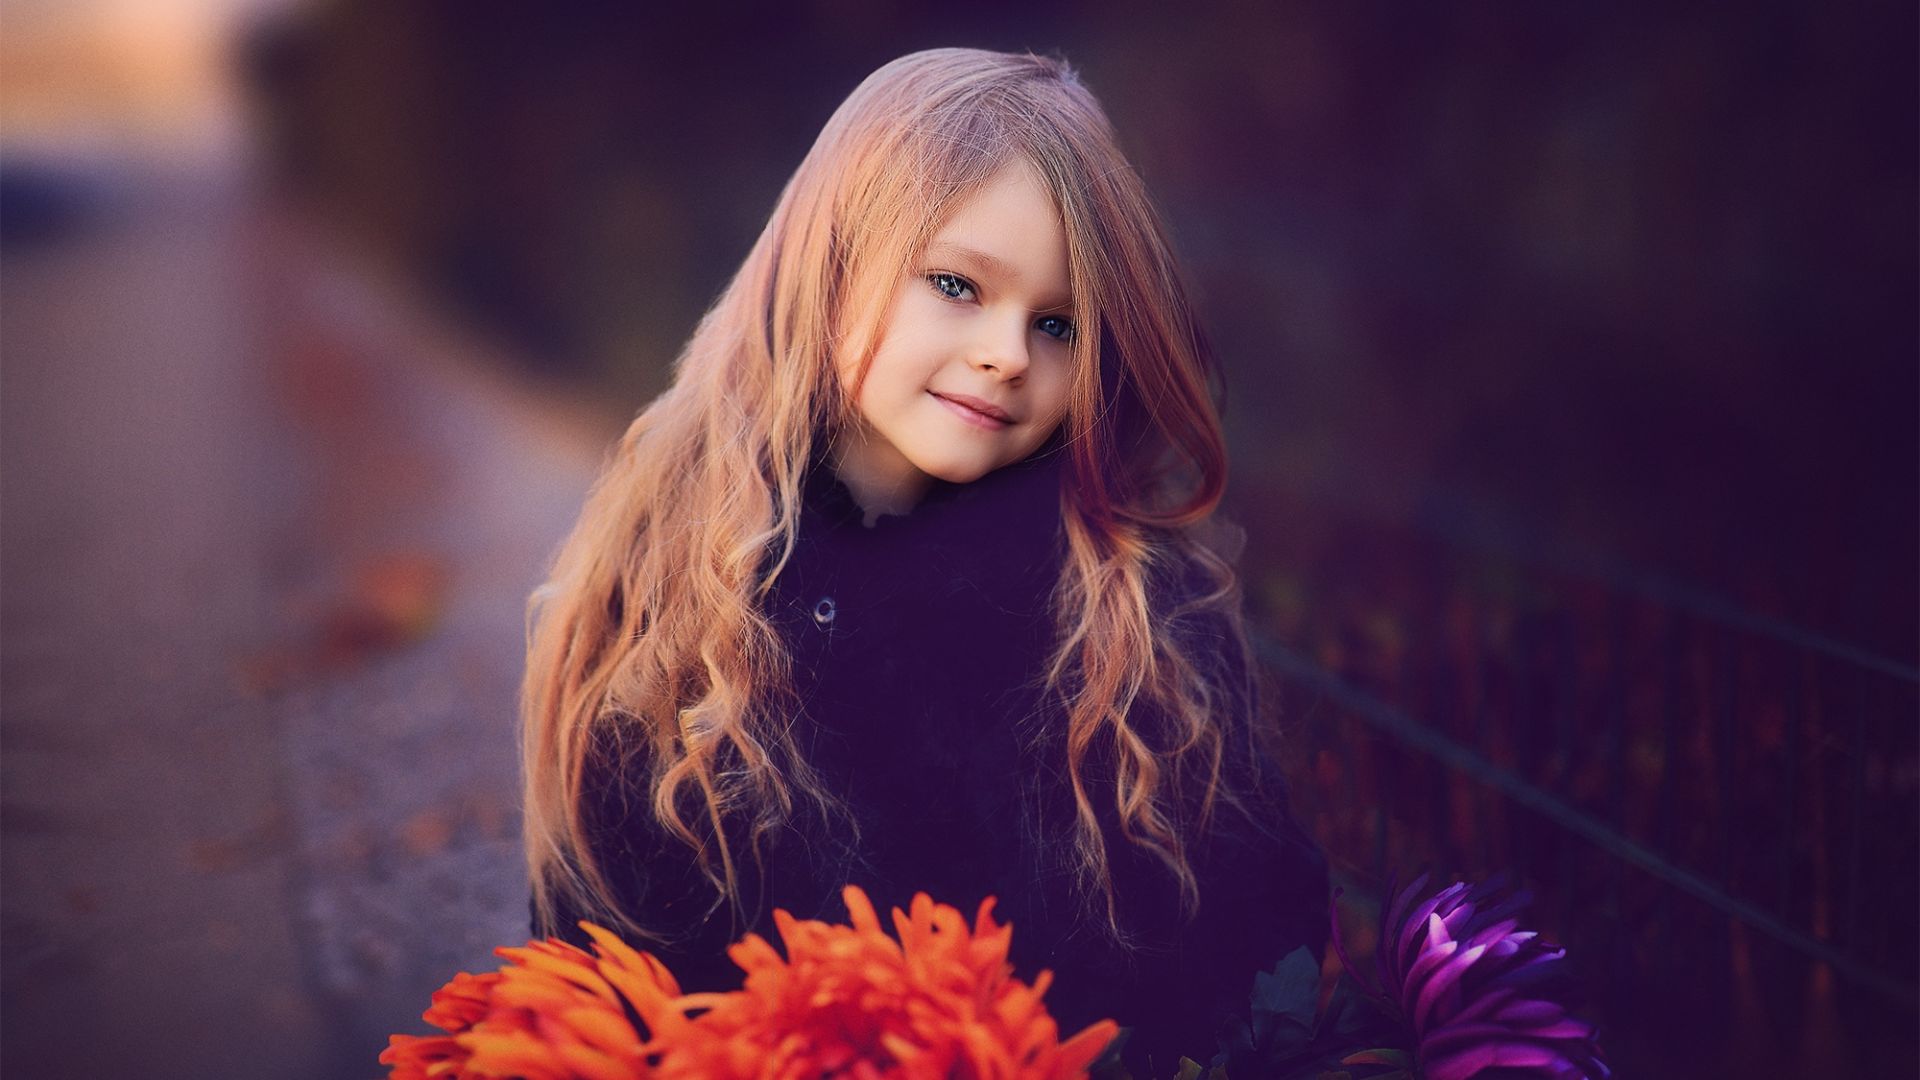 Wallpaper Cute, child girl, flowers